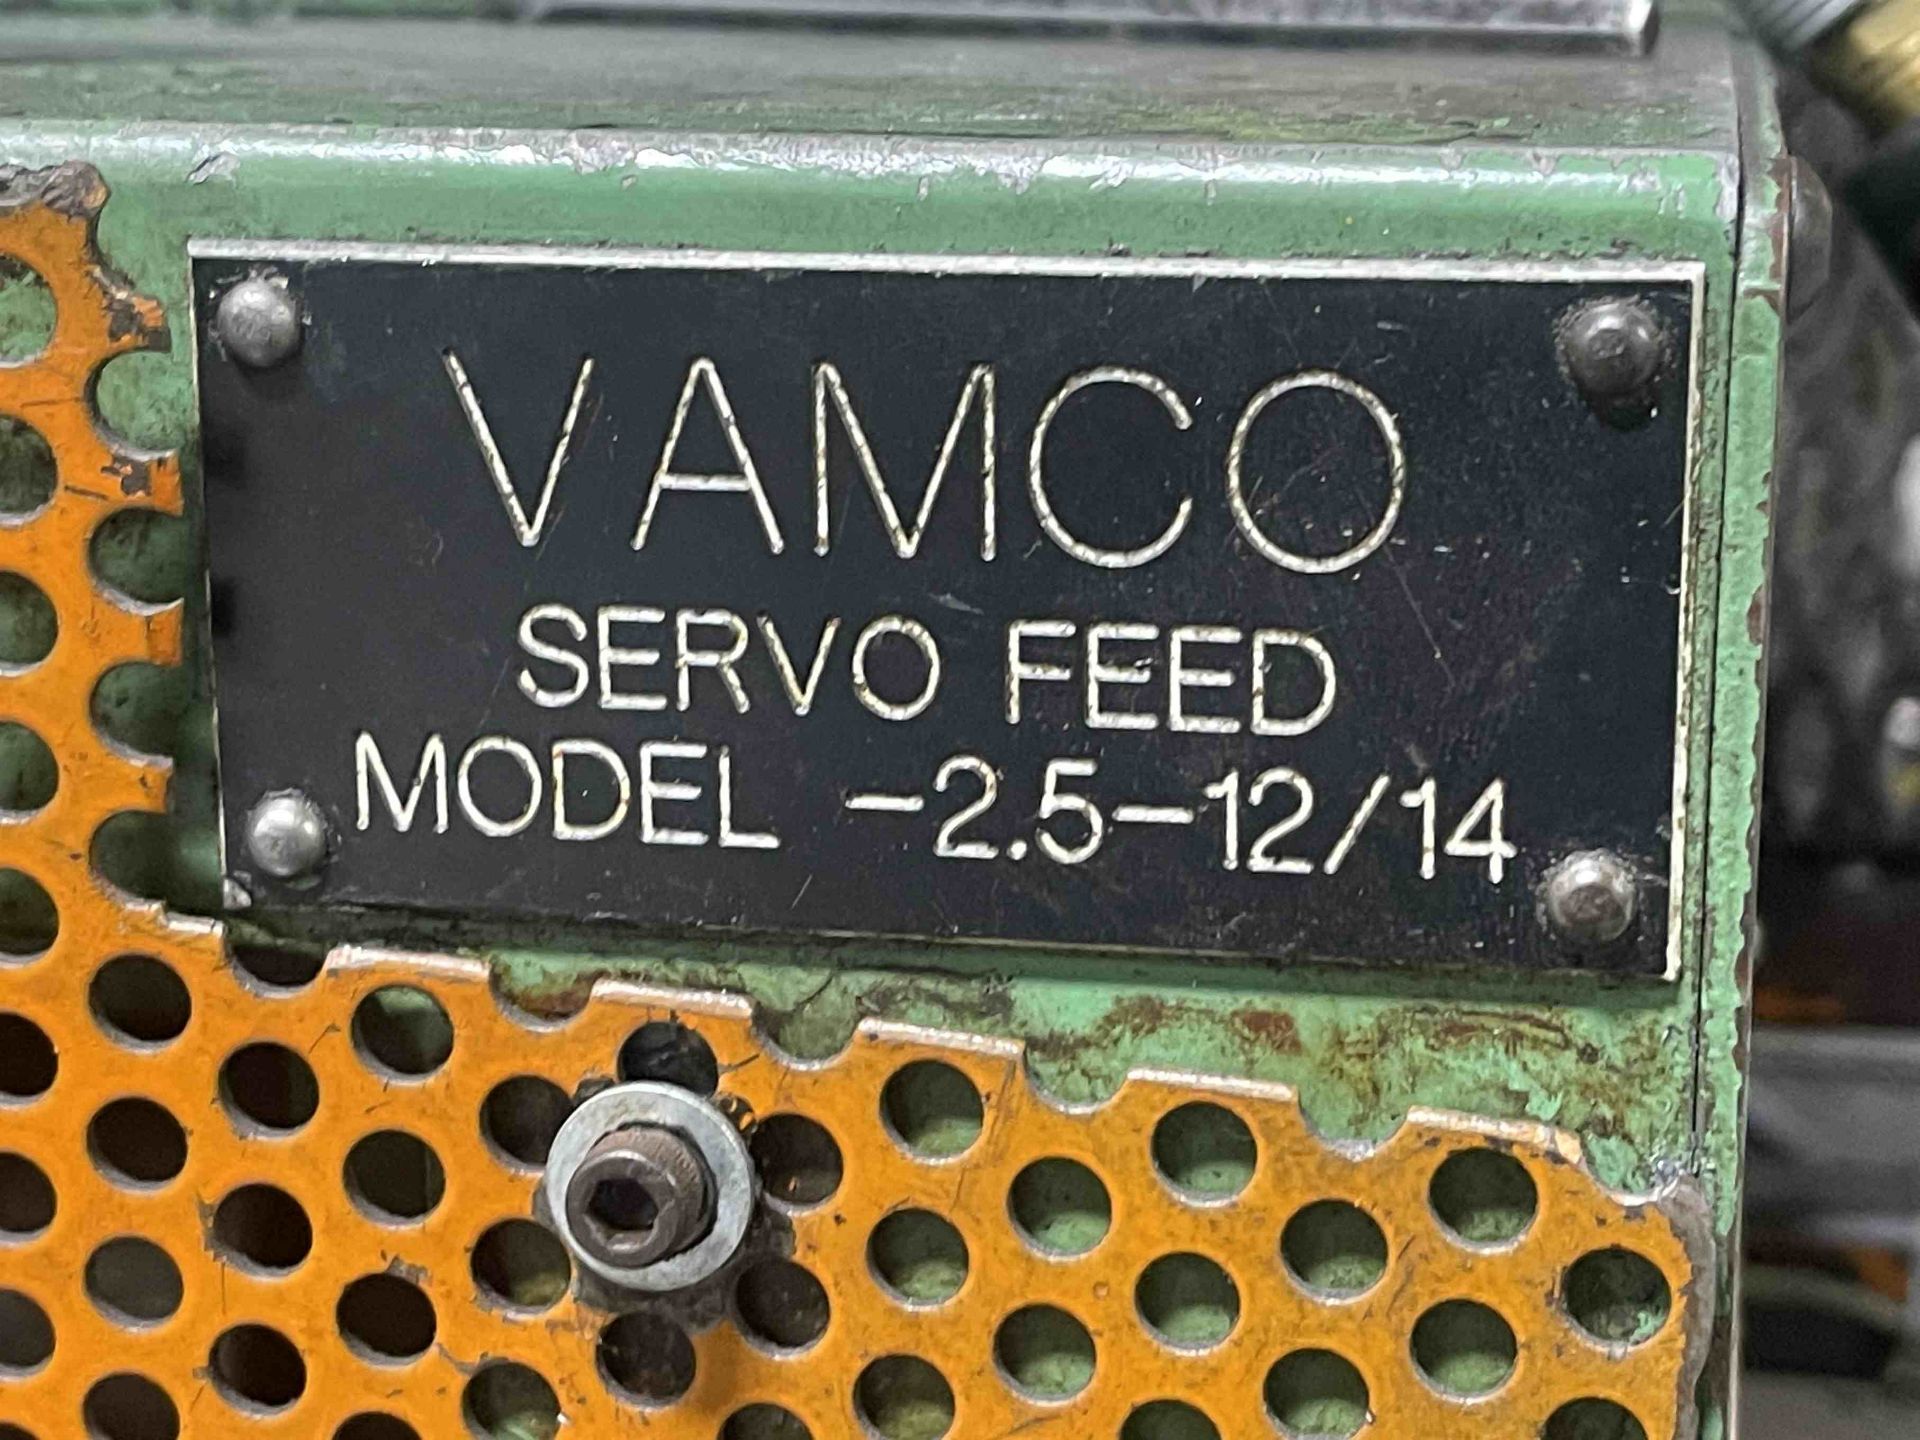 VAMCO 2.5-12/14 Servo Feed, s/n 2.51214YEAPCL36R, w/ Eason 1000 Control - Image 4 of 6